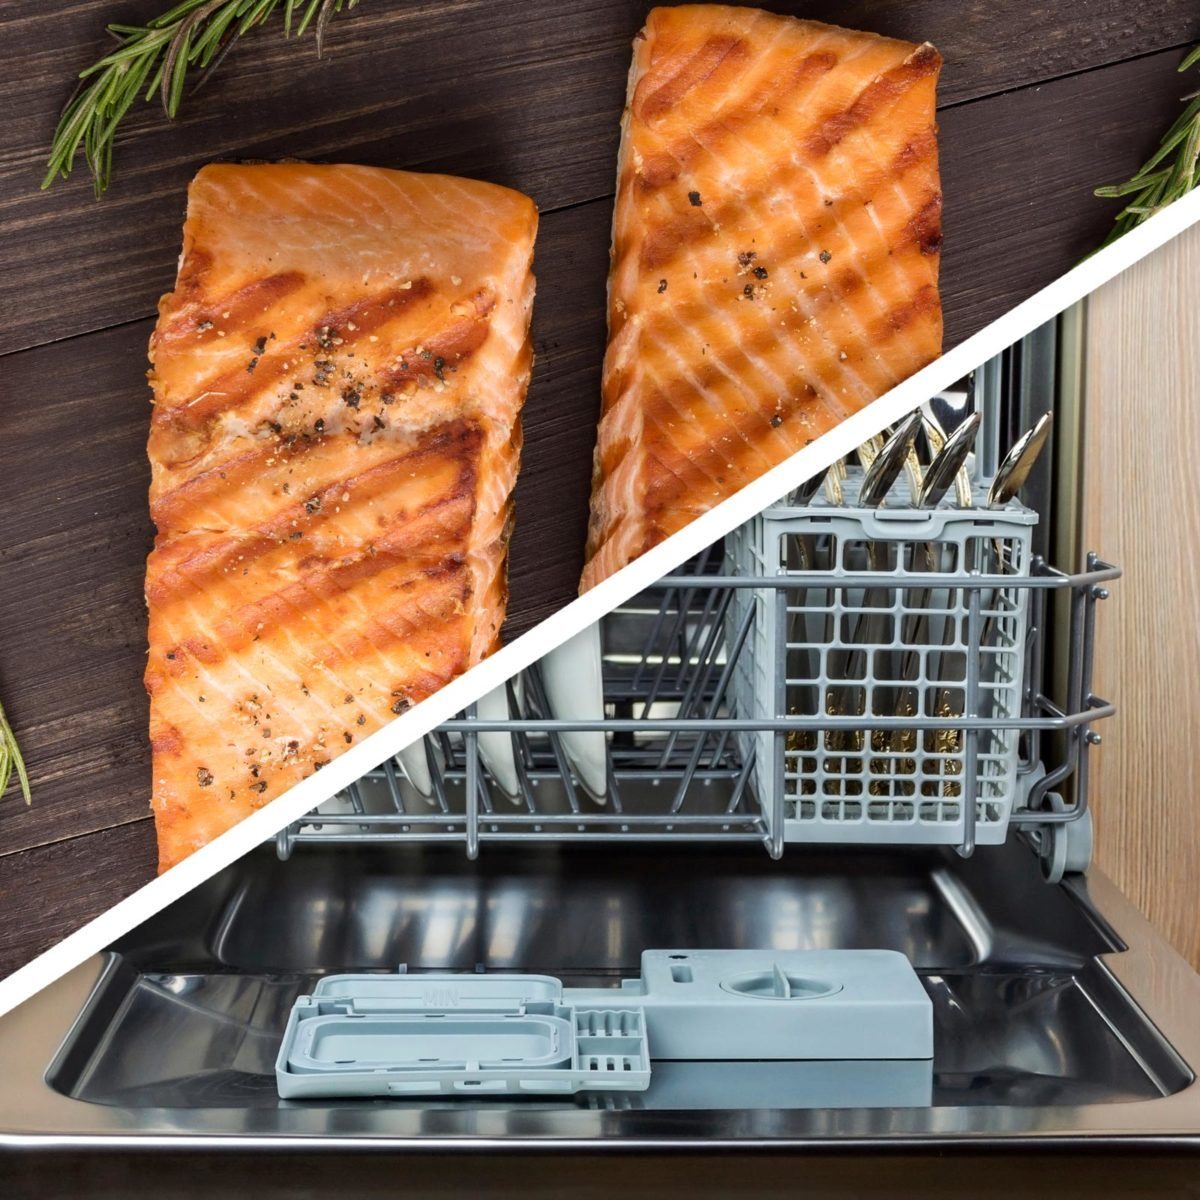 Salmon and dishwasher